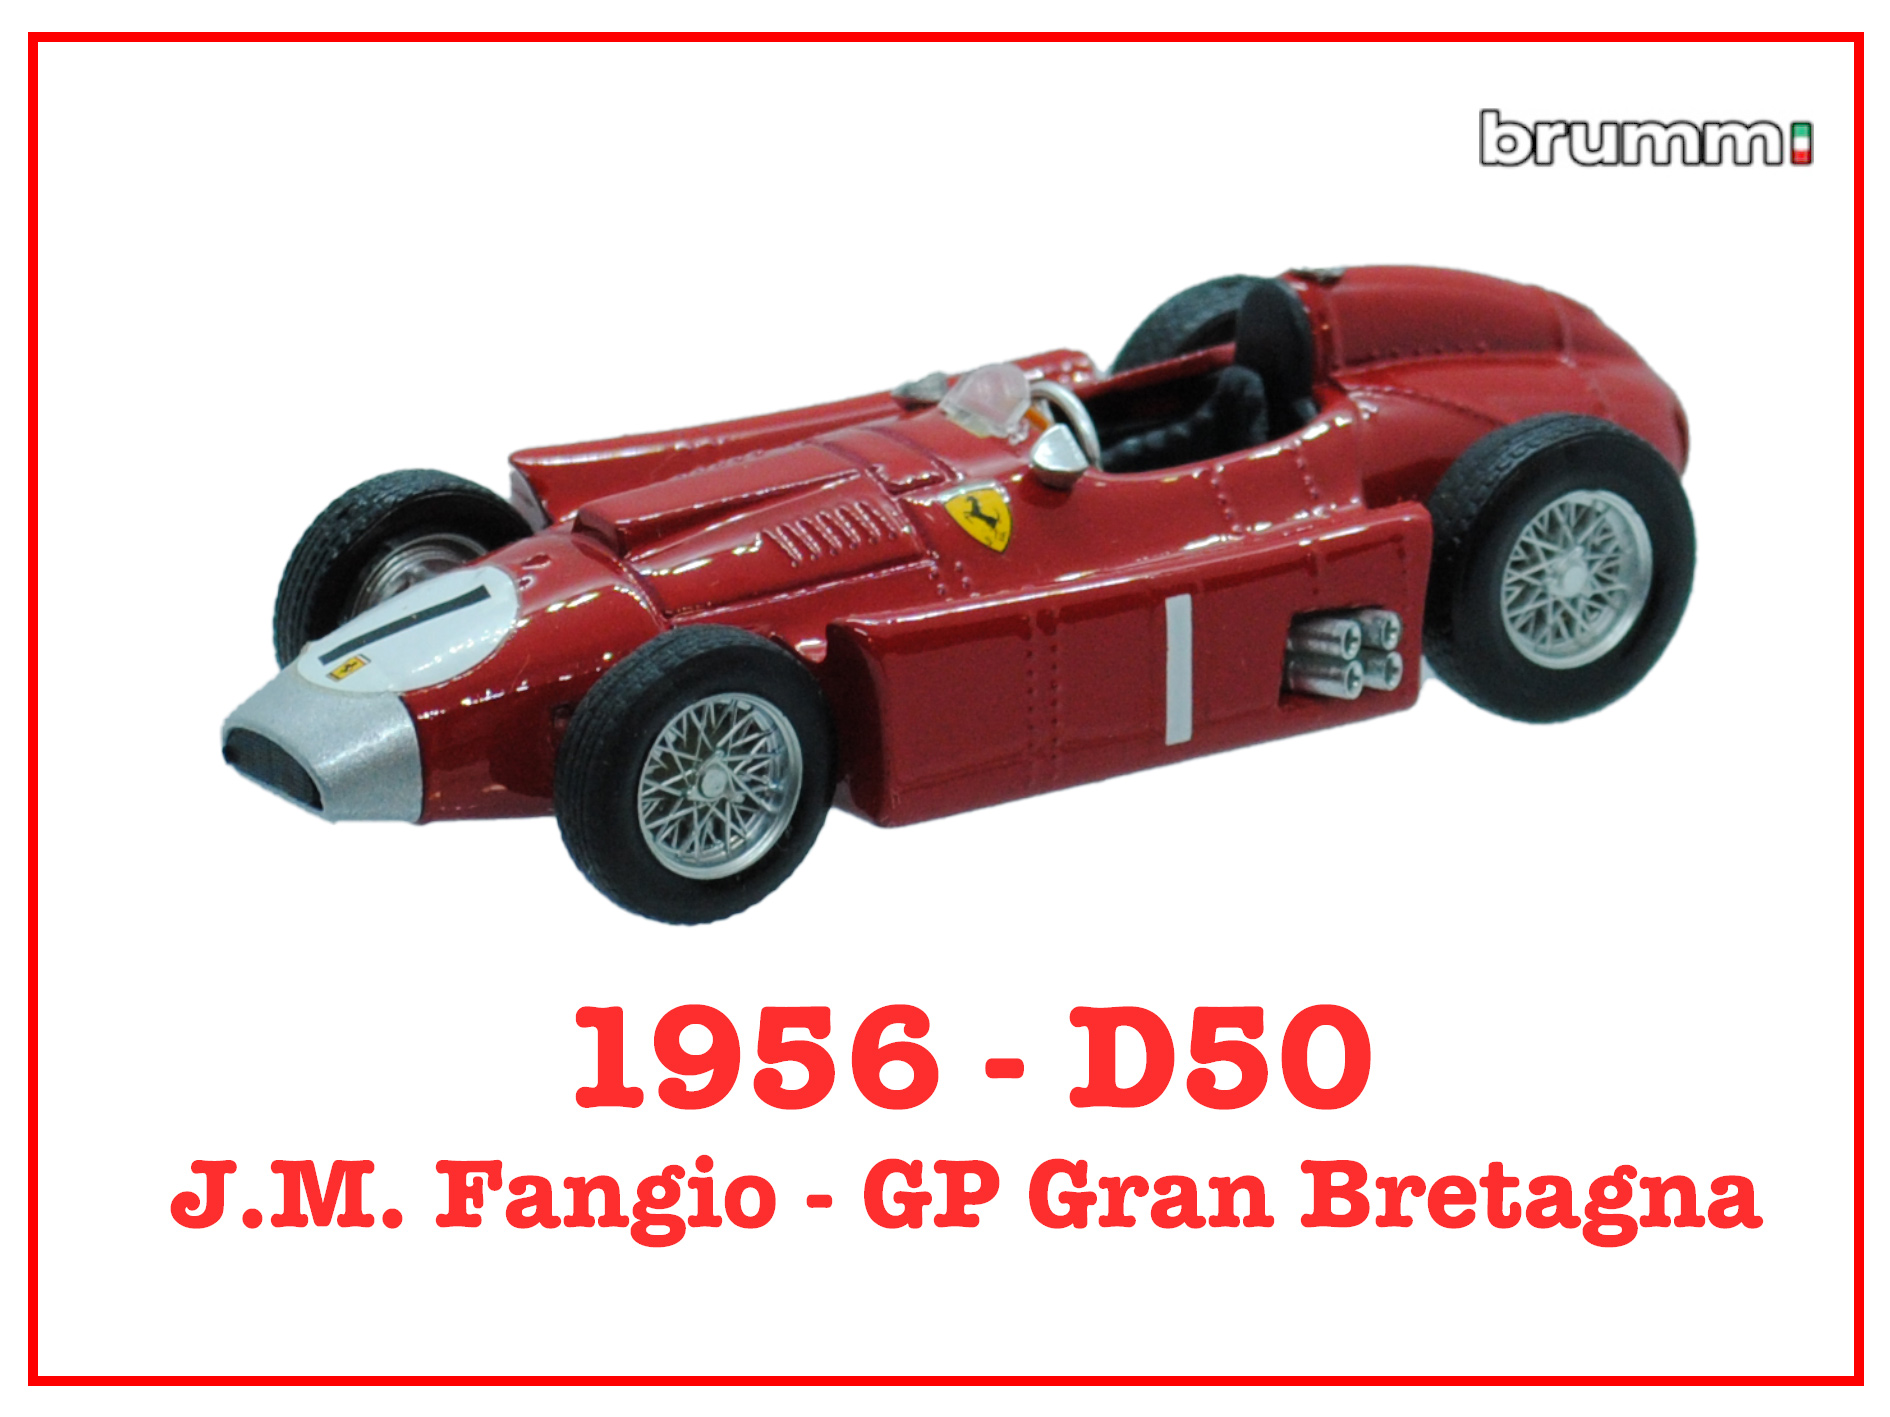 Immagine D50 - J.M. Fangio GP Gran BRetagna